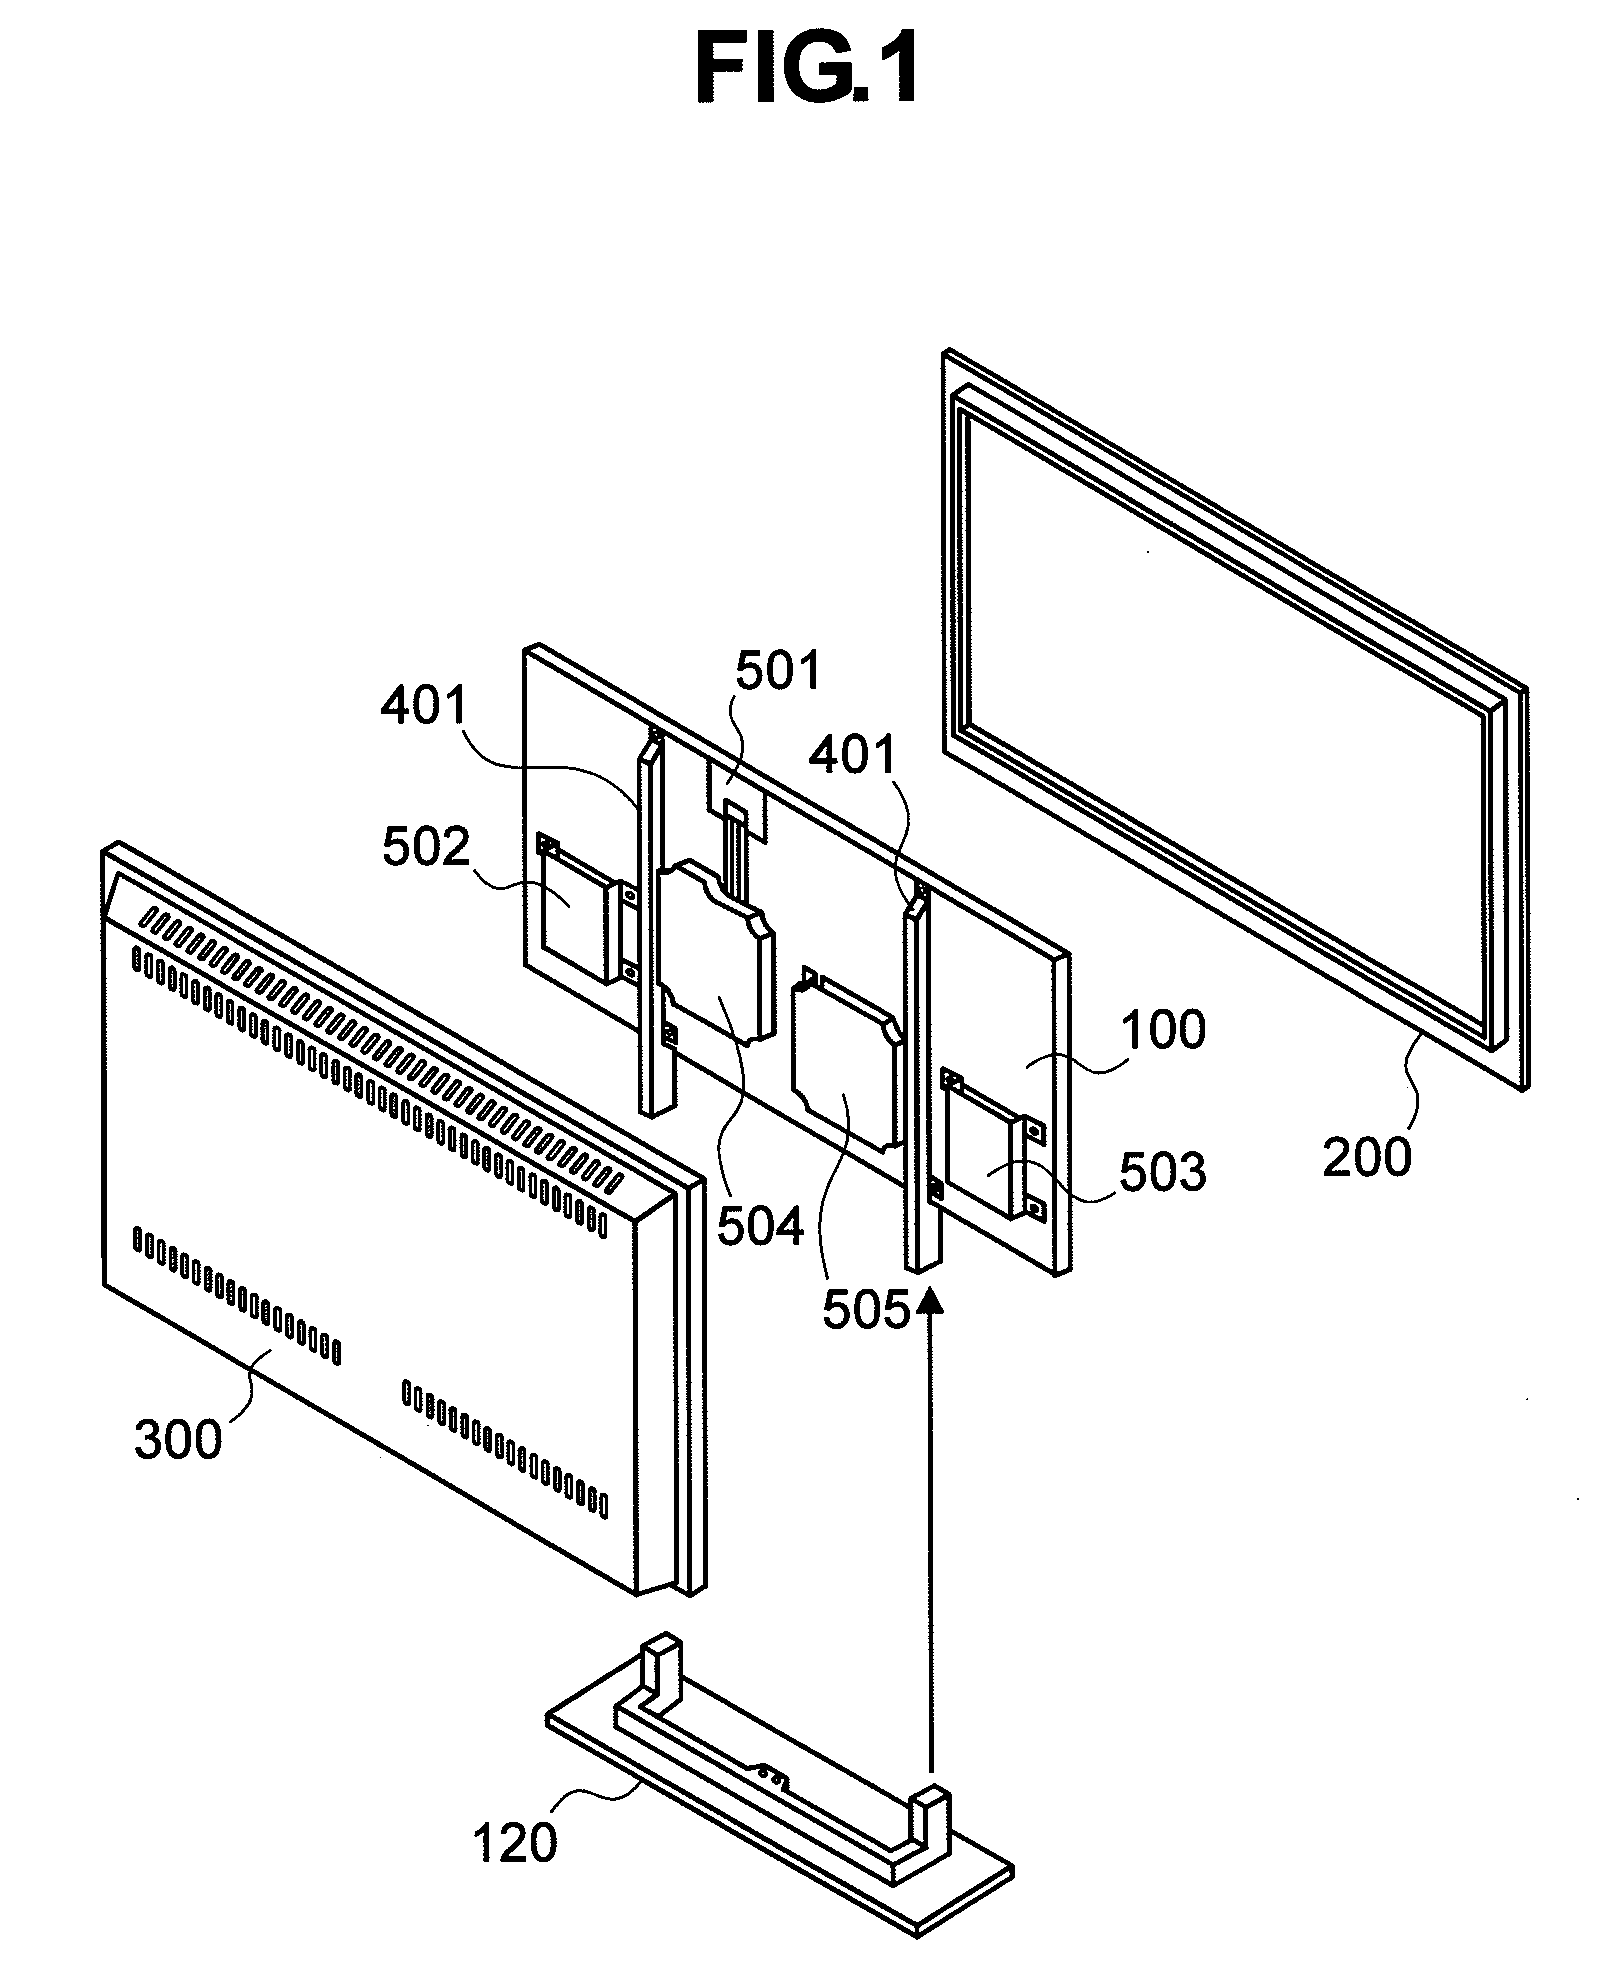 Display apparatus for displaying an image